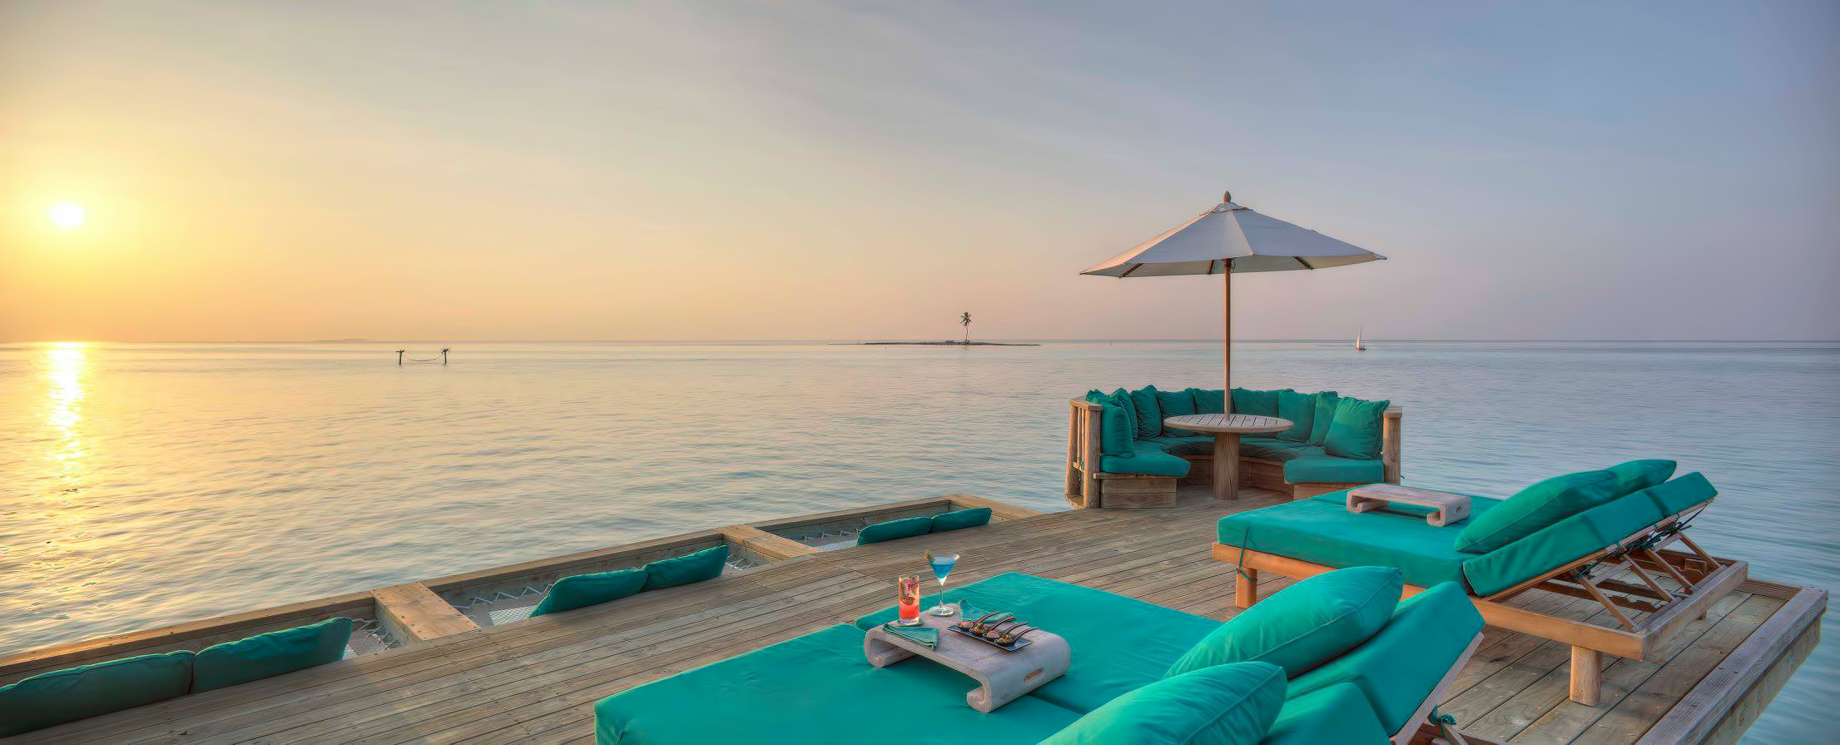 Gili Lankanfushi Resort – North Male Atoll, Maldives – Overwater Villa Deck Sunset